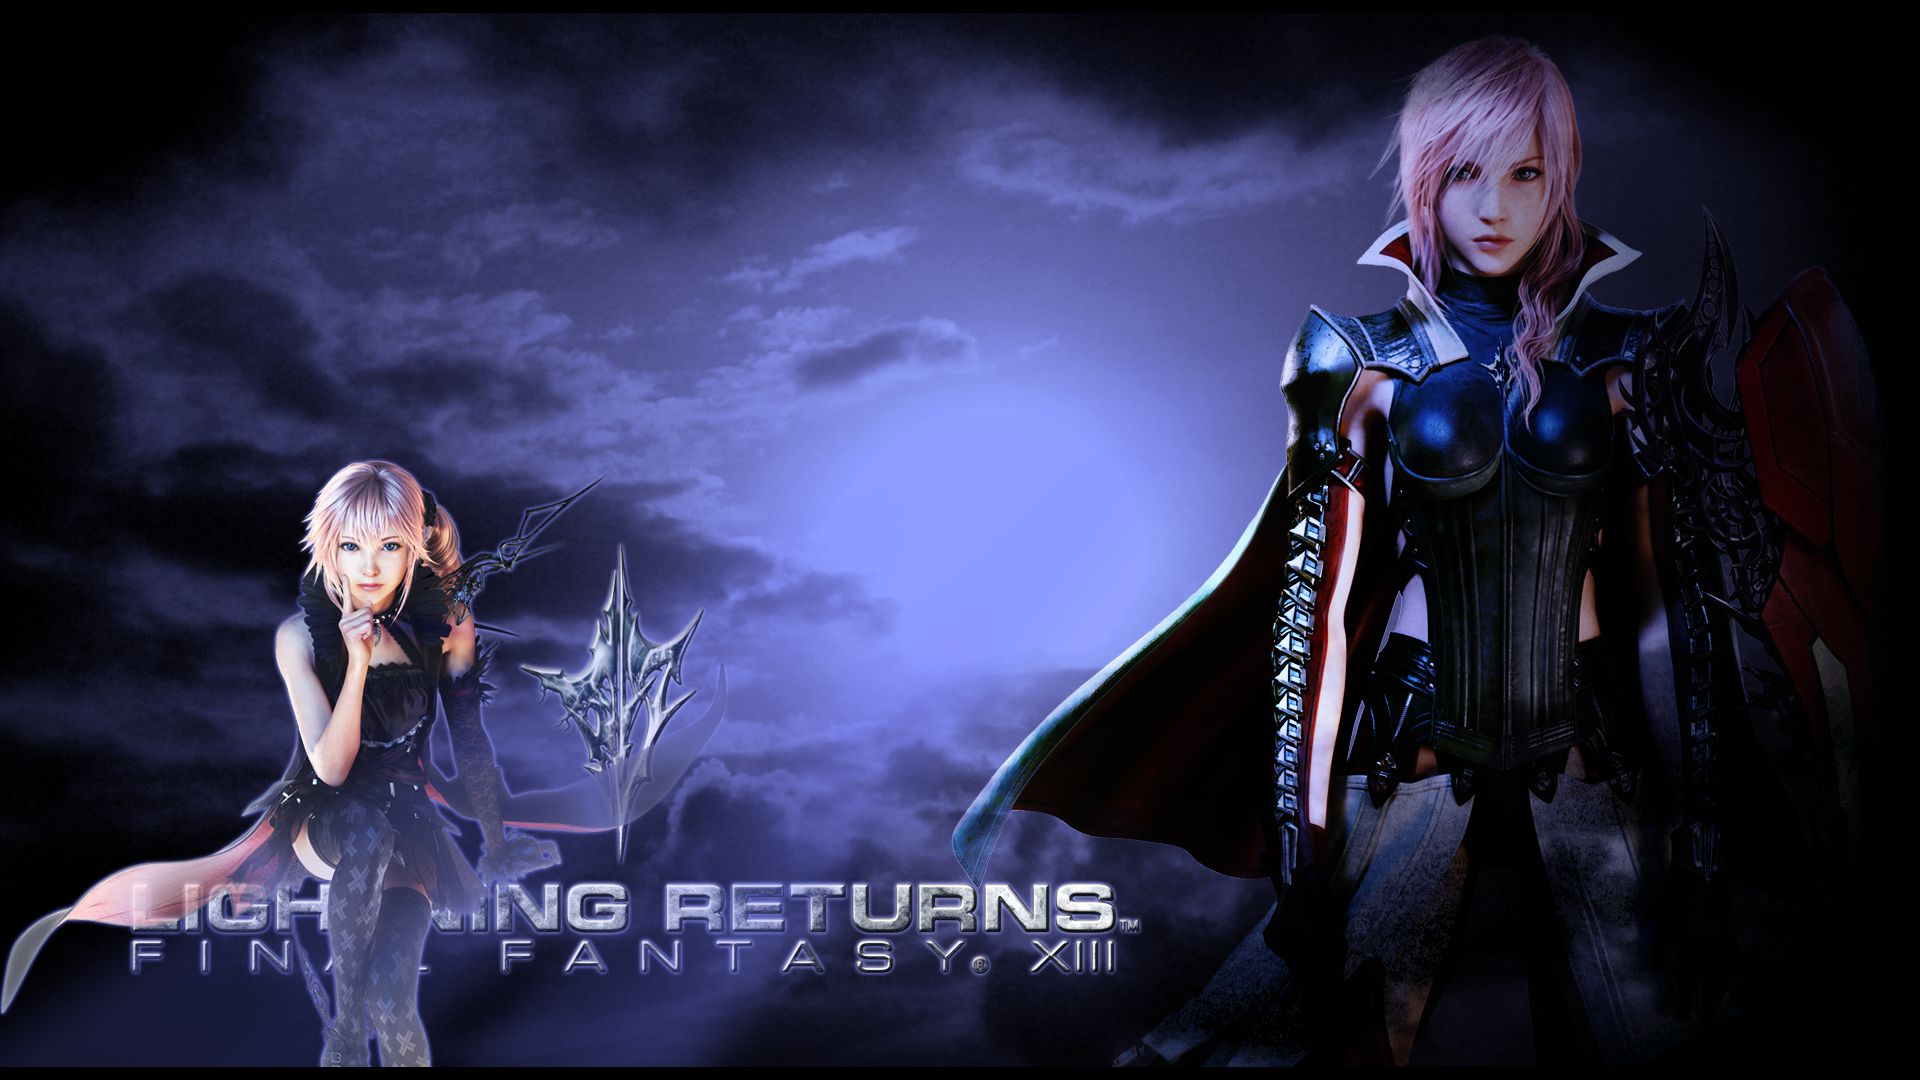 Lightning Returns Final Fantasy Xiii Wallpaper By Thegr8tani